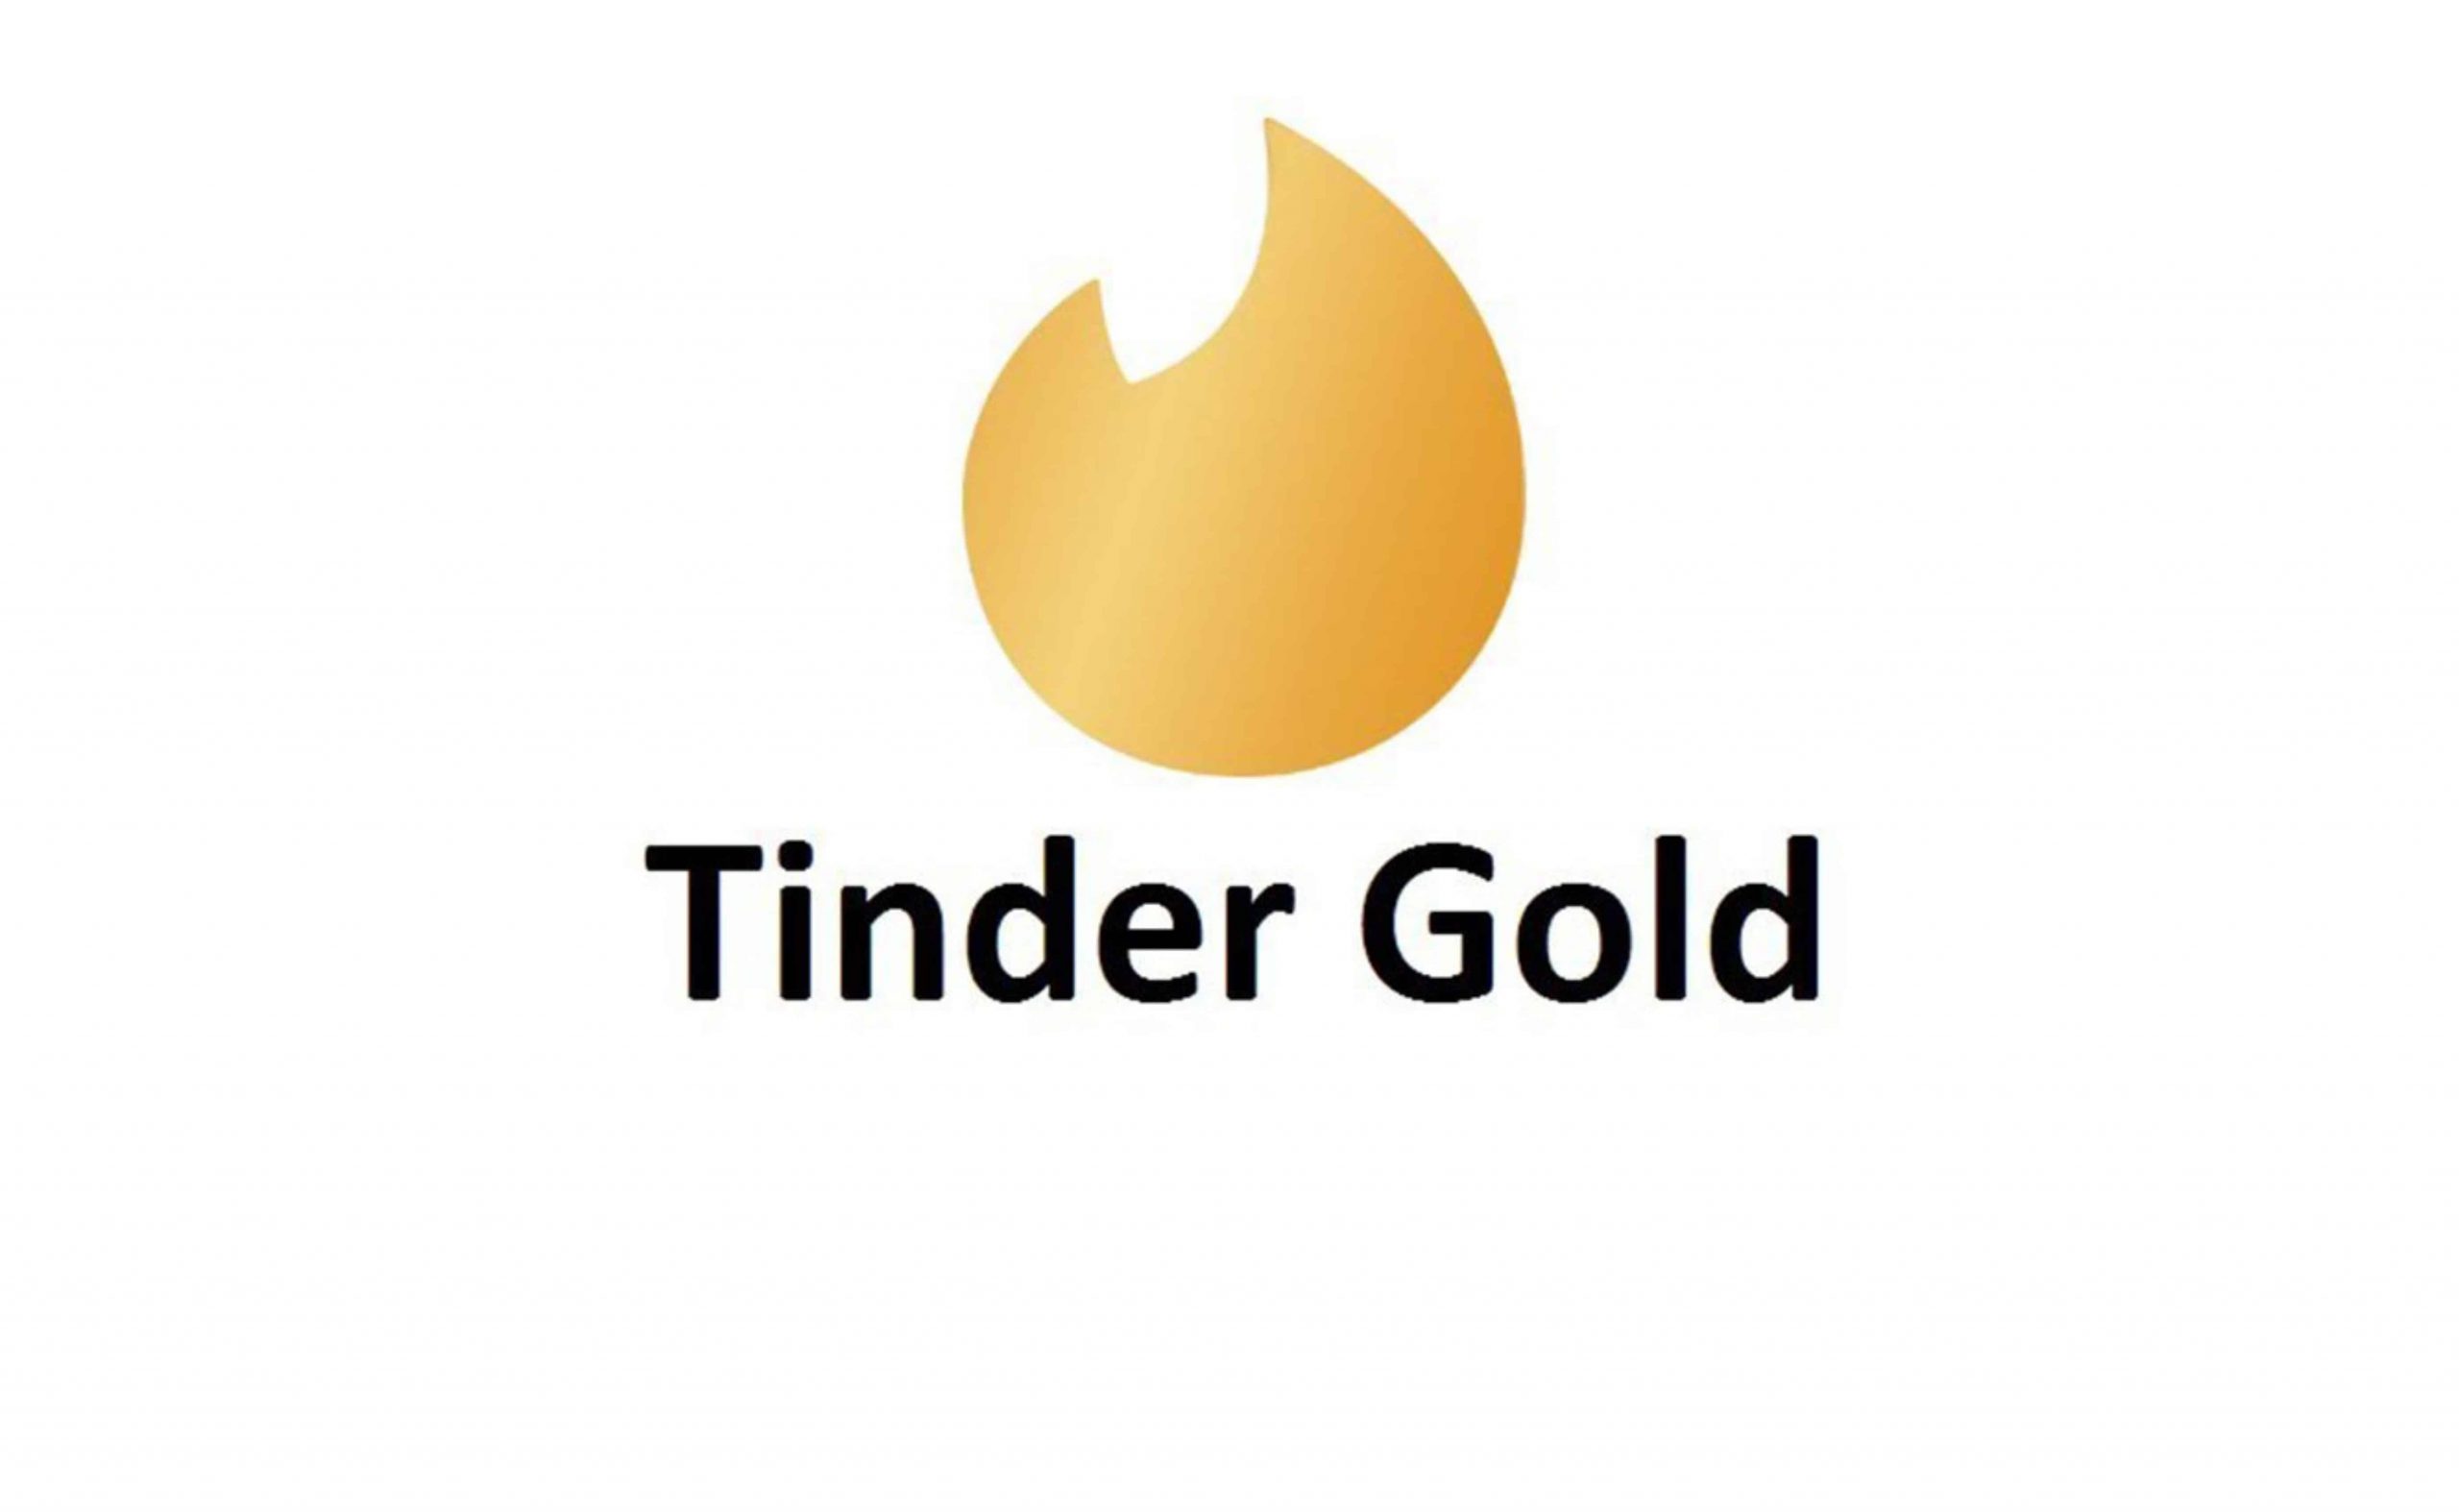 Conseguir Tinder Gold Gratis es Posible 🤑 (2021 Actualizado)